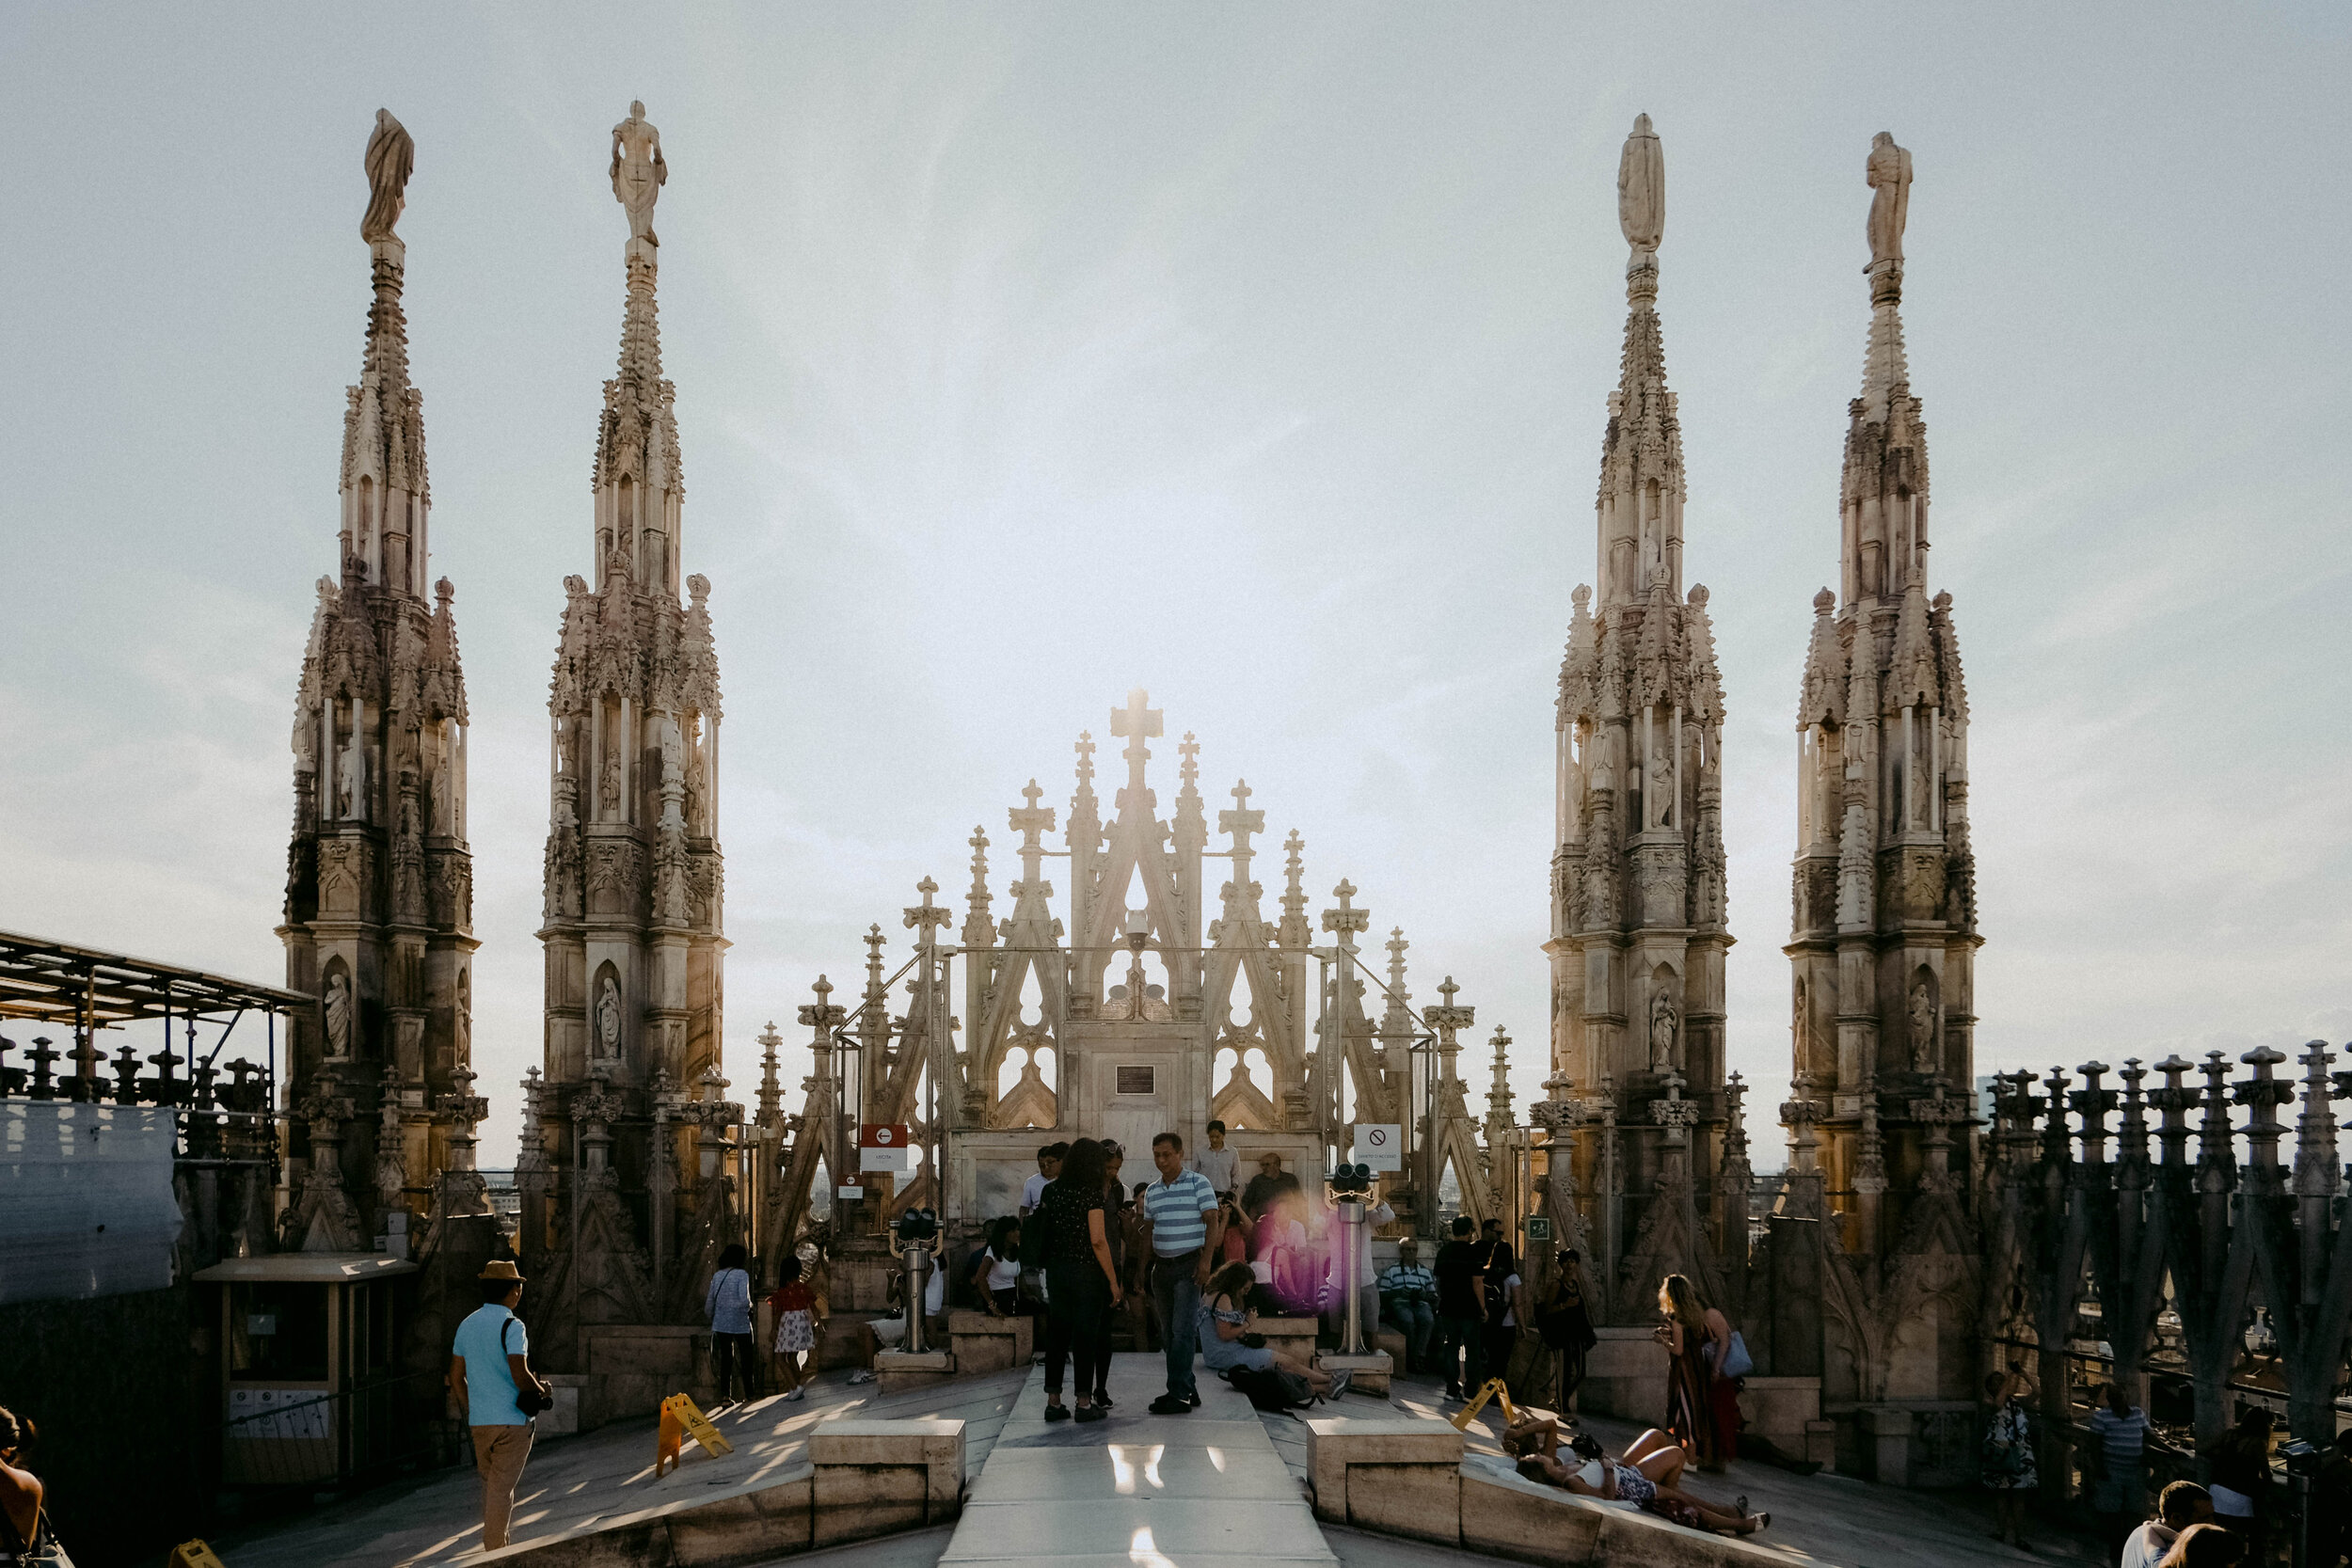 016 - Duomo di Milano.JPG